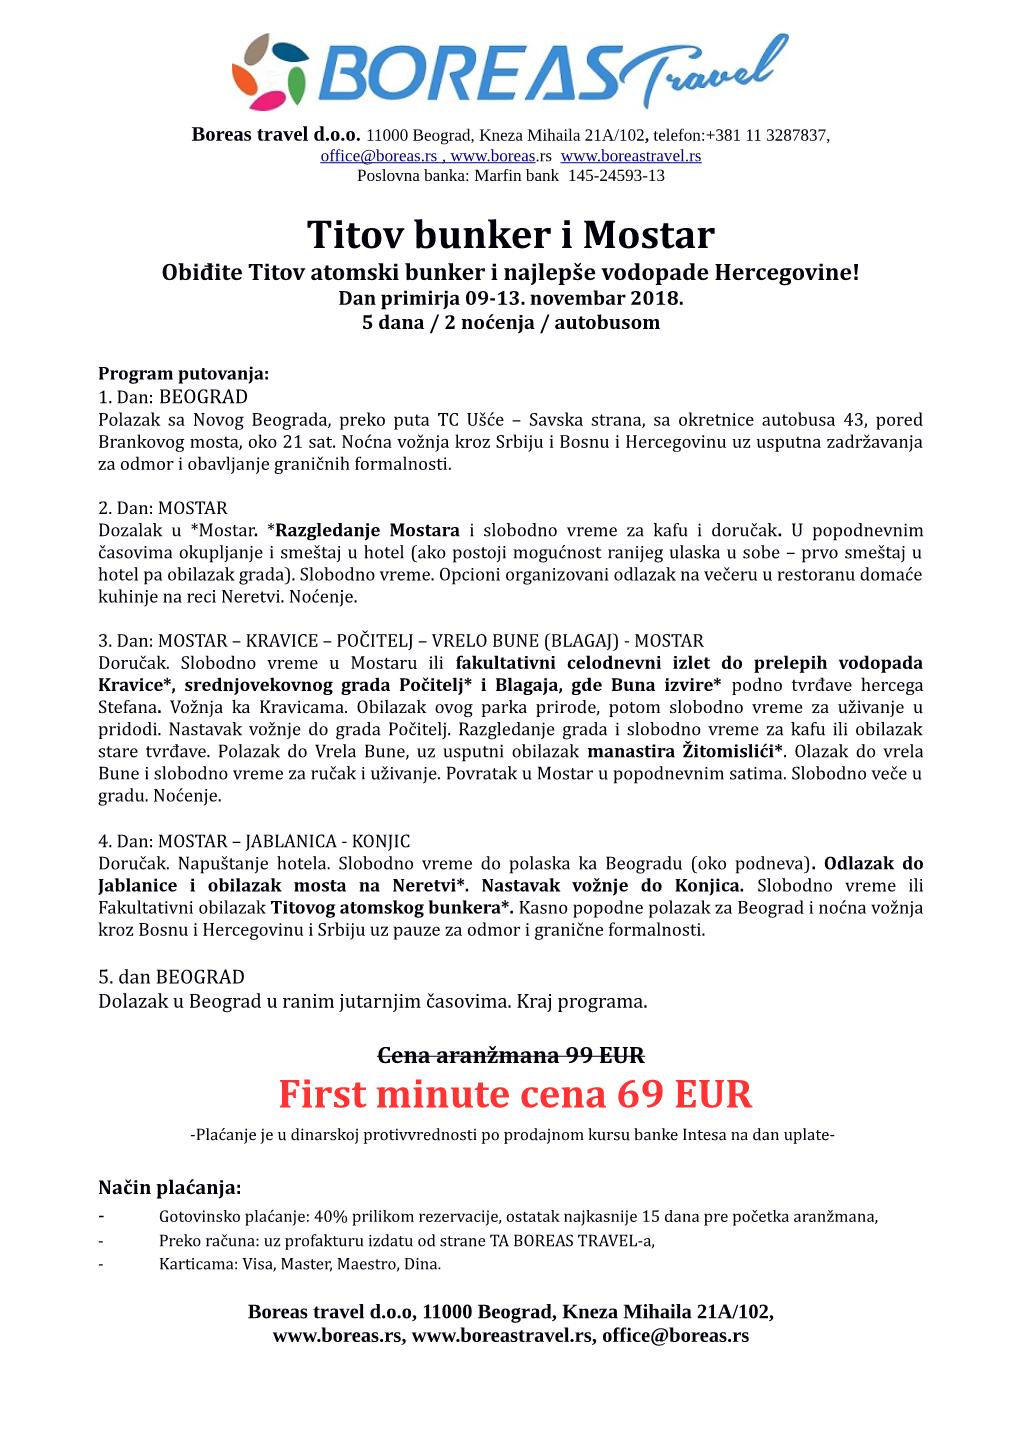 Titov Bunker I Mostar First Minute Cena 69